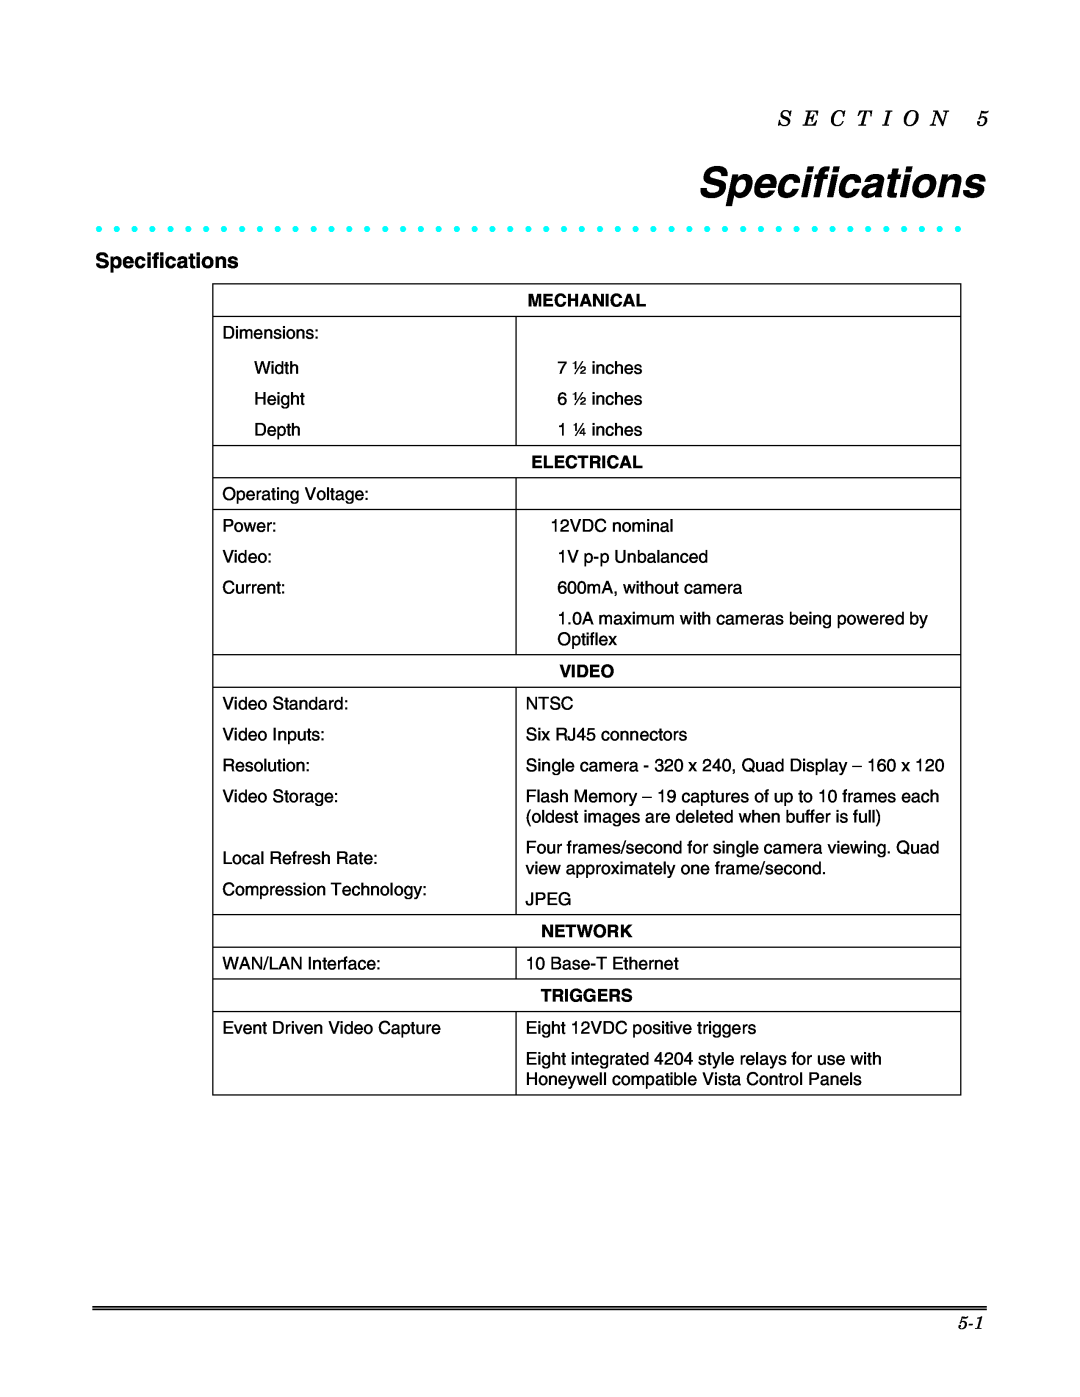 Honeywell Optiflex setup guide Specifications, S E C T I O N 